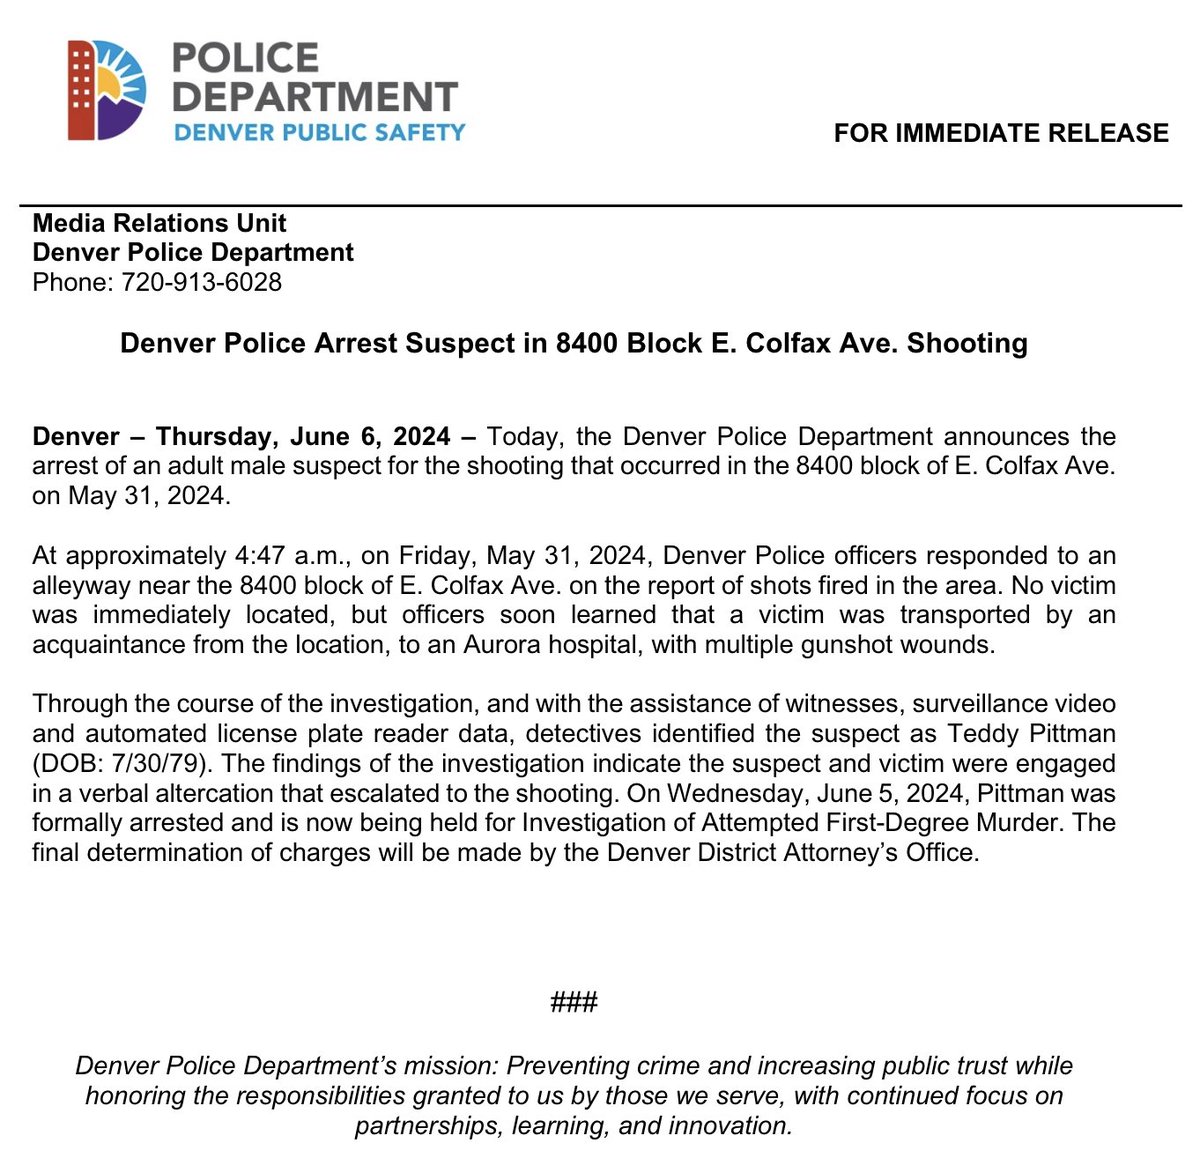 Denver Police Arrest Suspect in 8400 Block E. Colfax Ave. Shooting